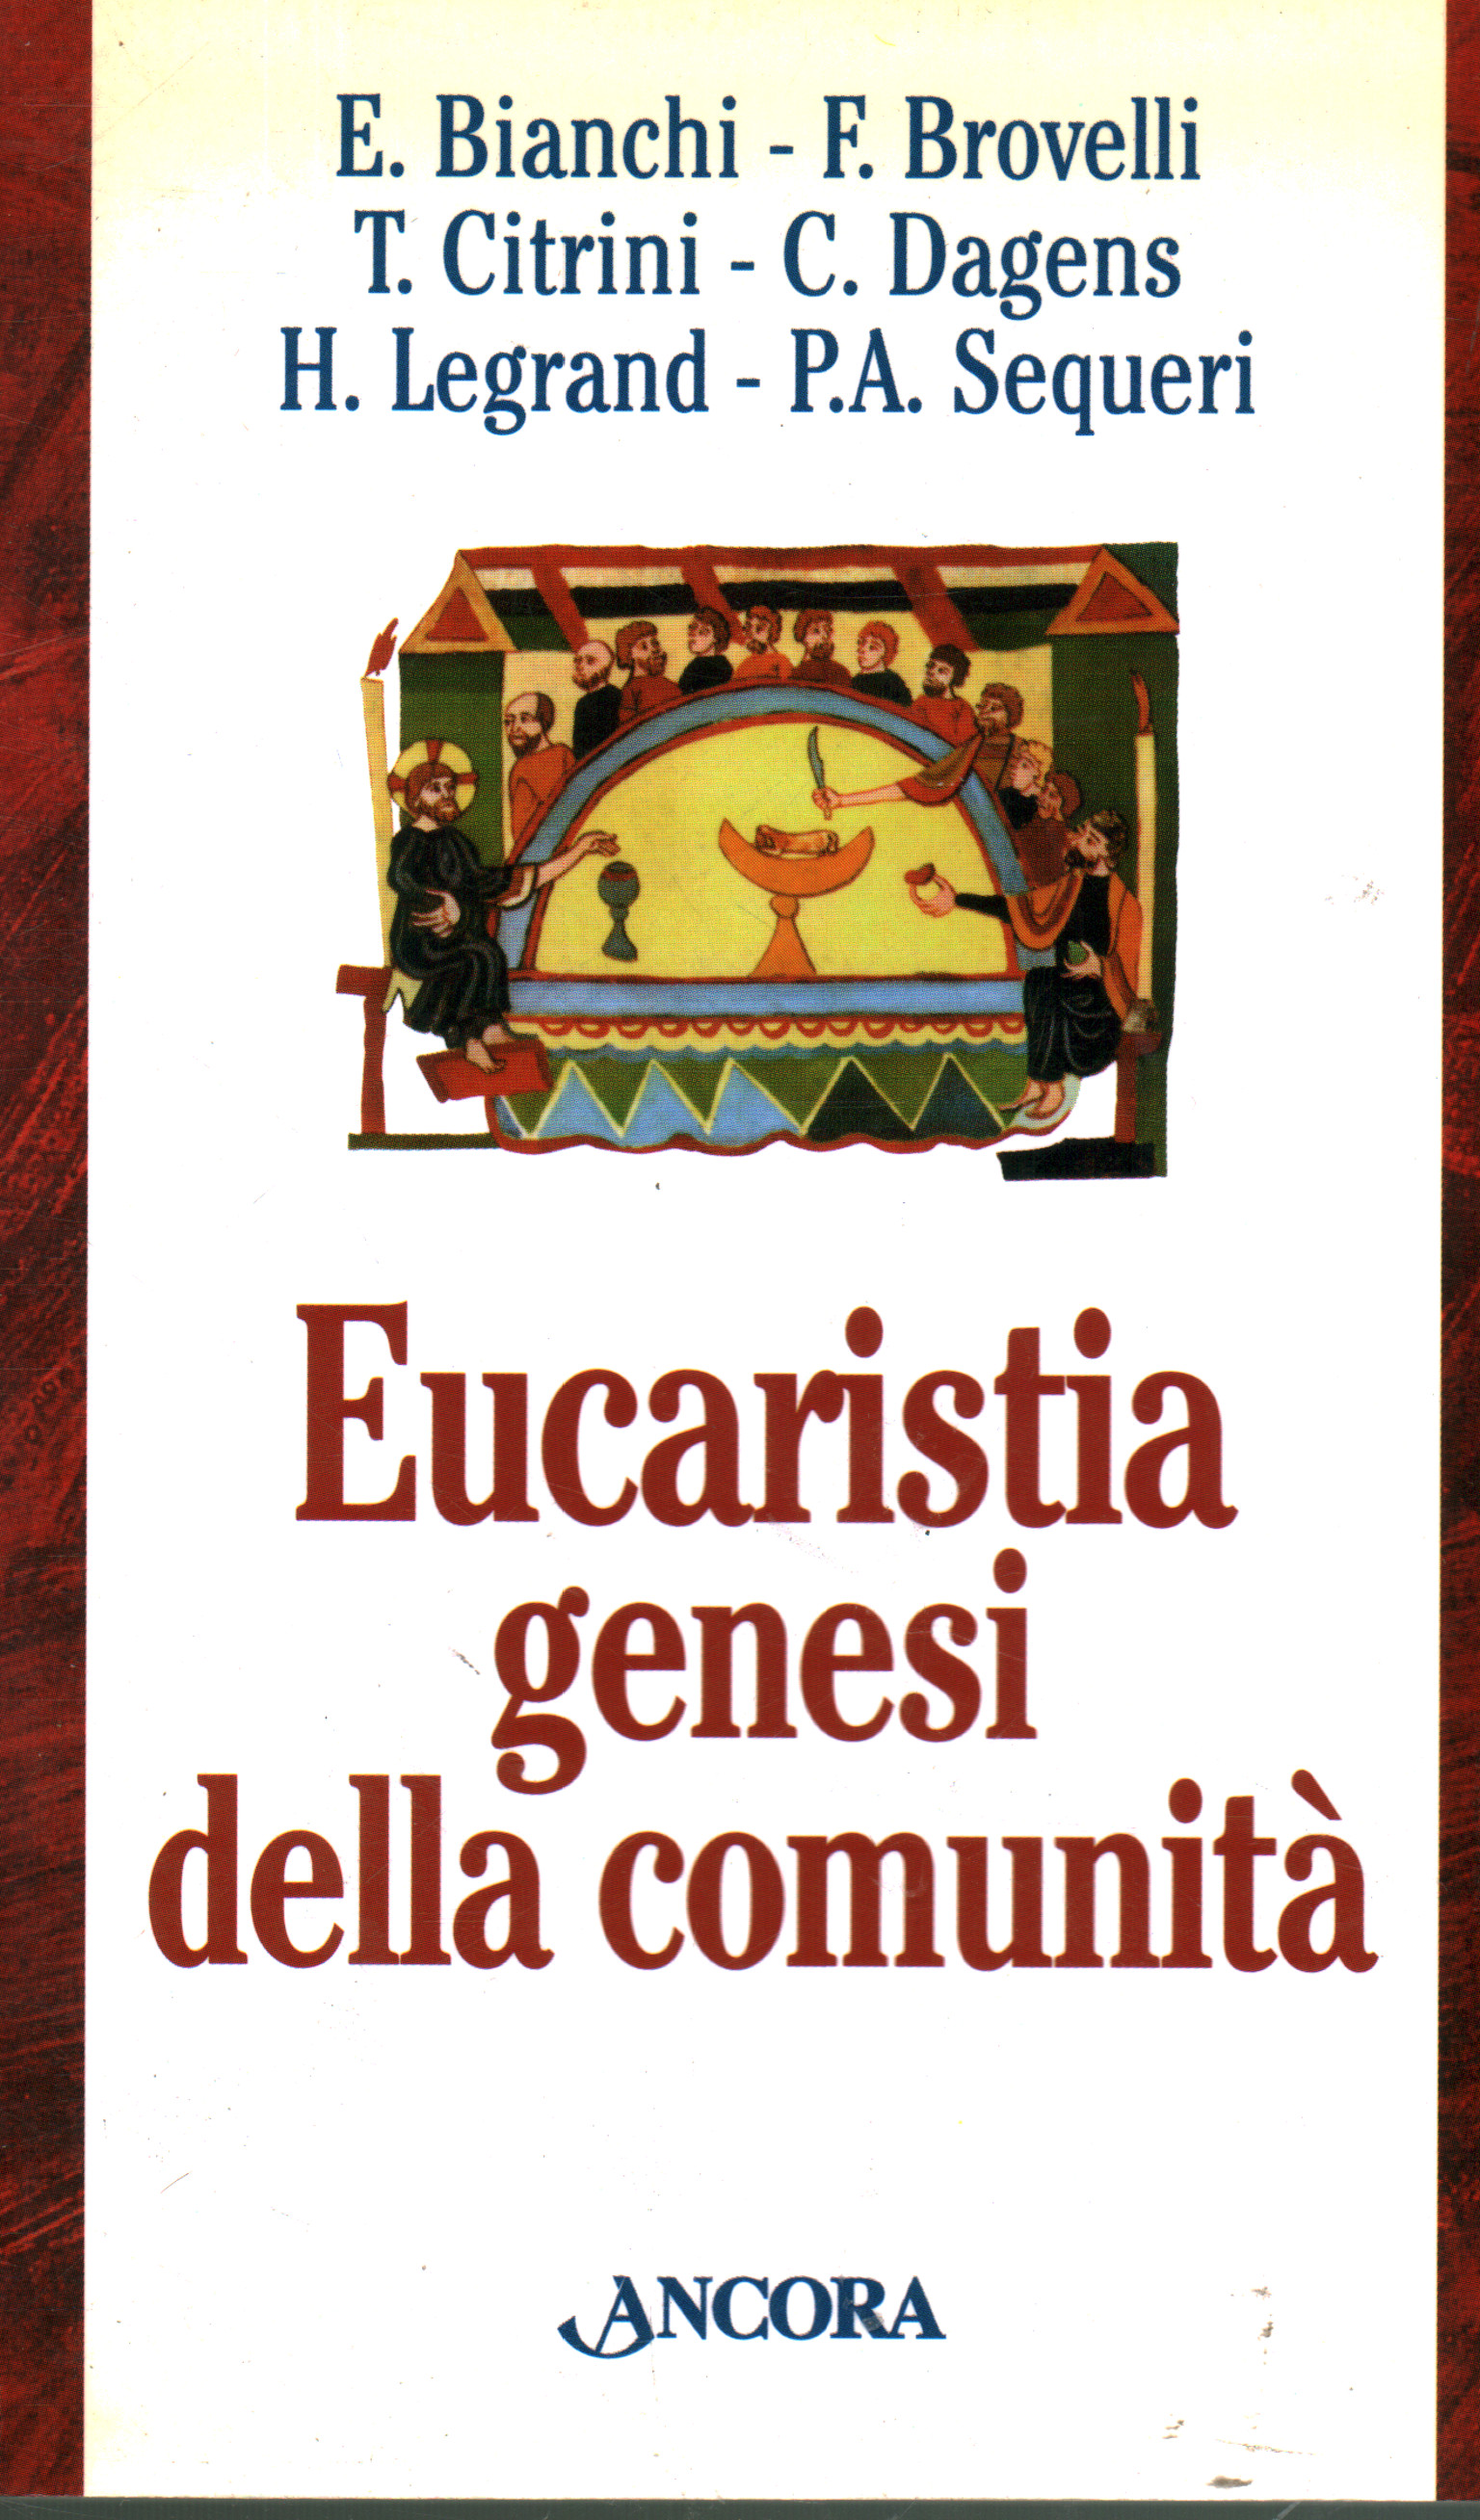 Eucharist genesis of the community